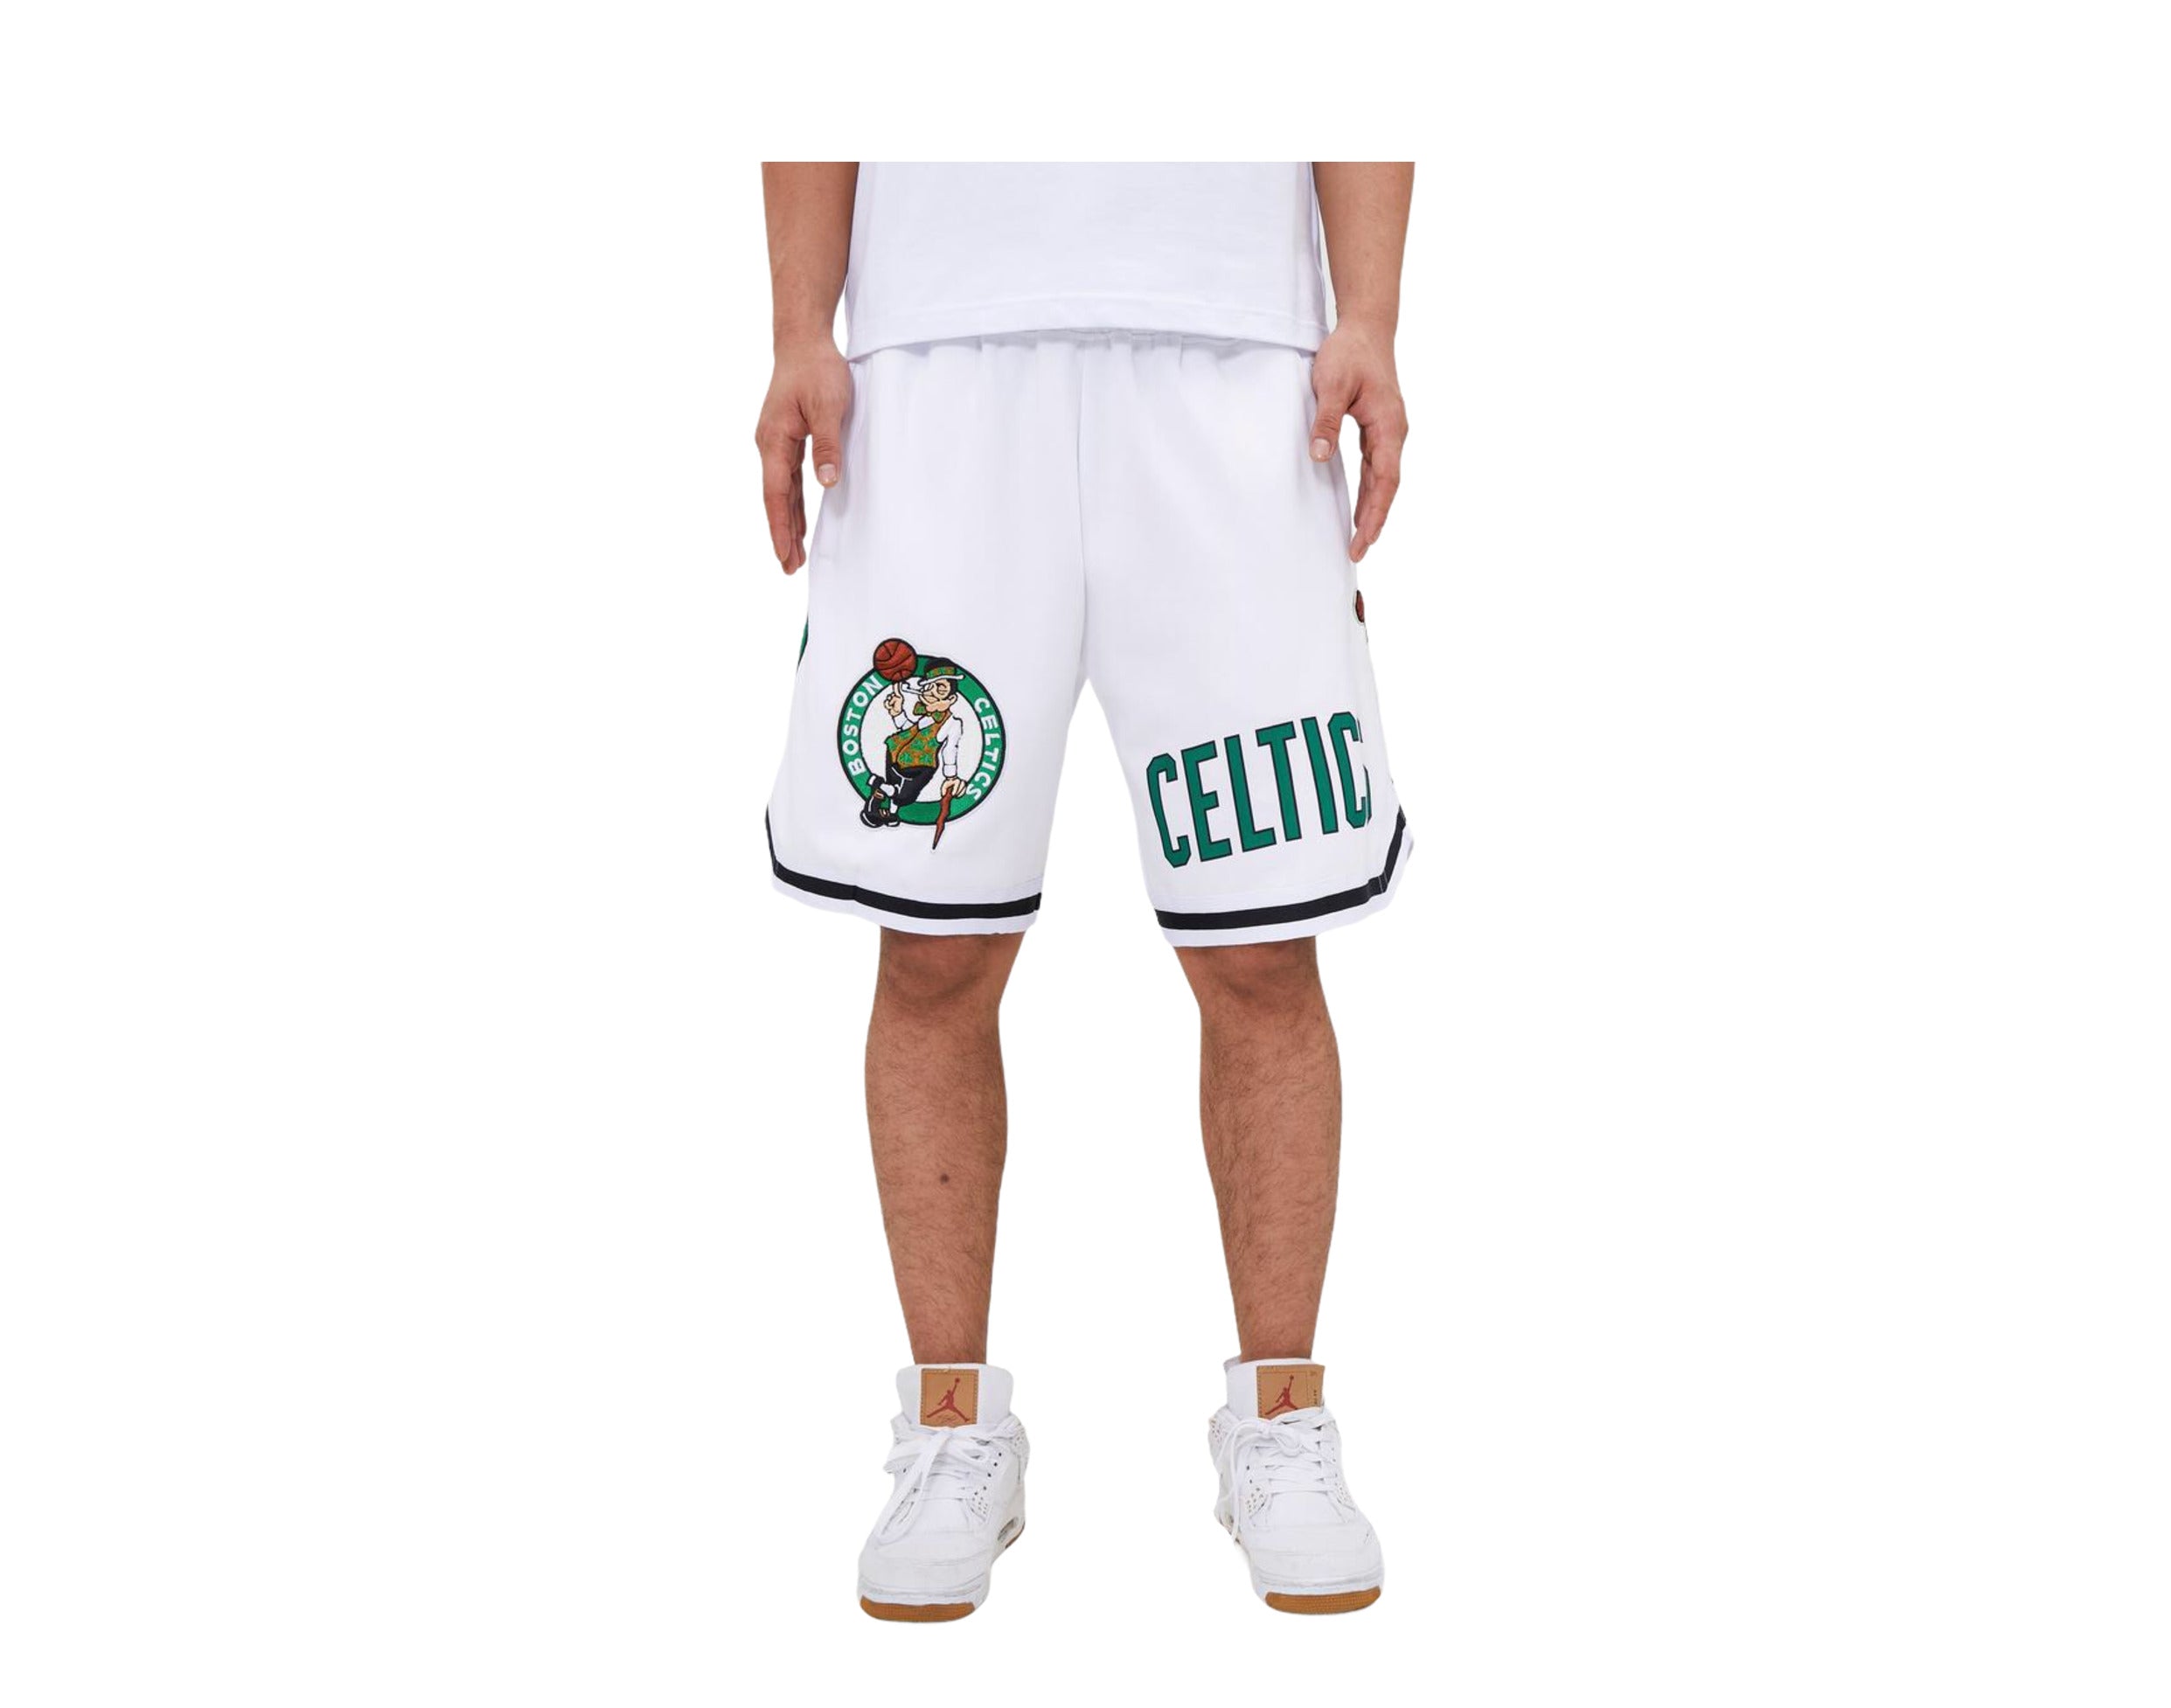 new celtic shorts